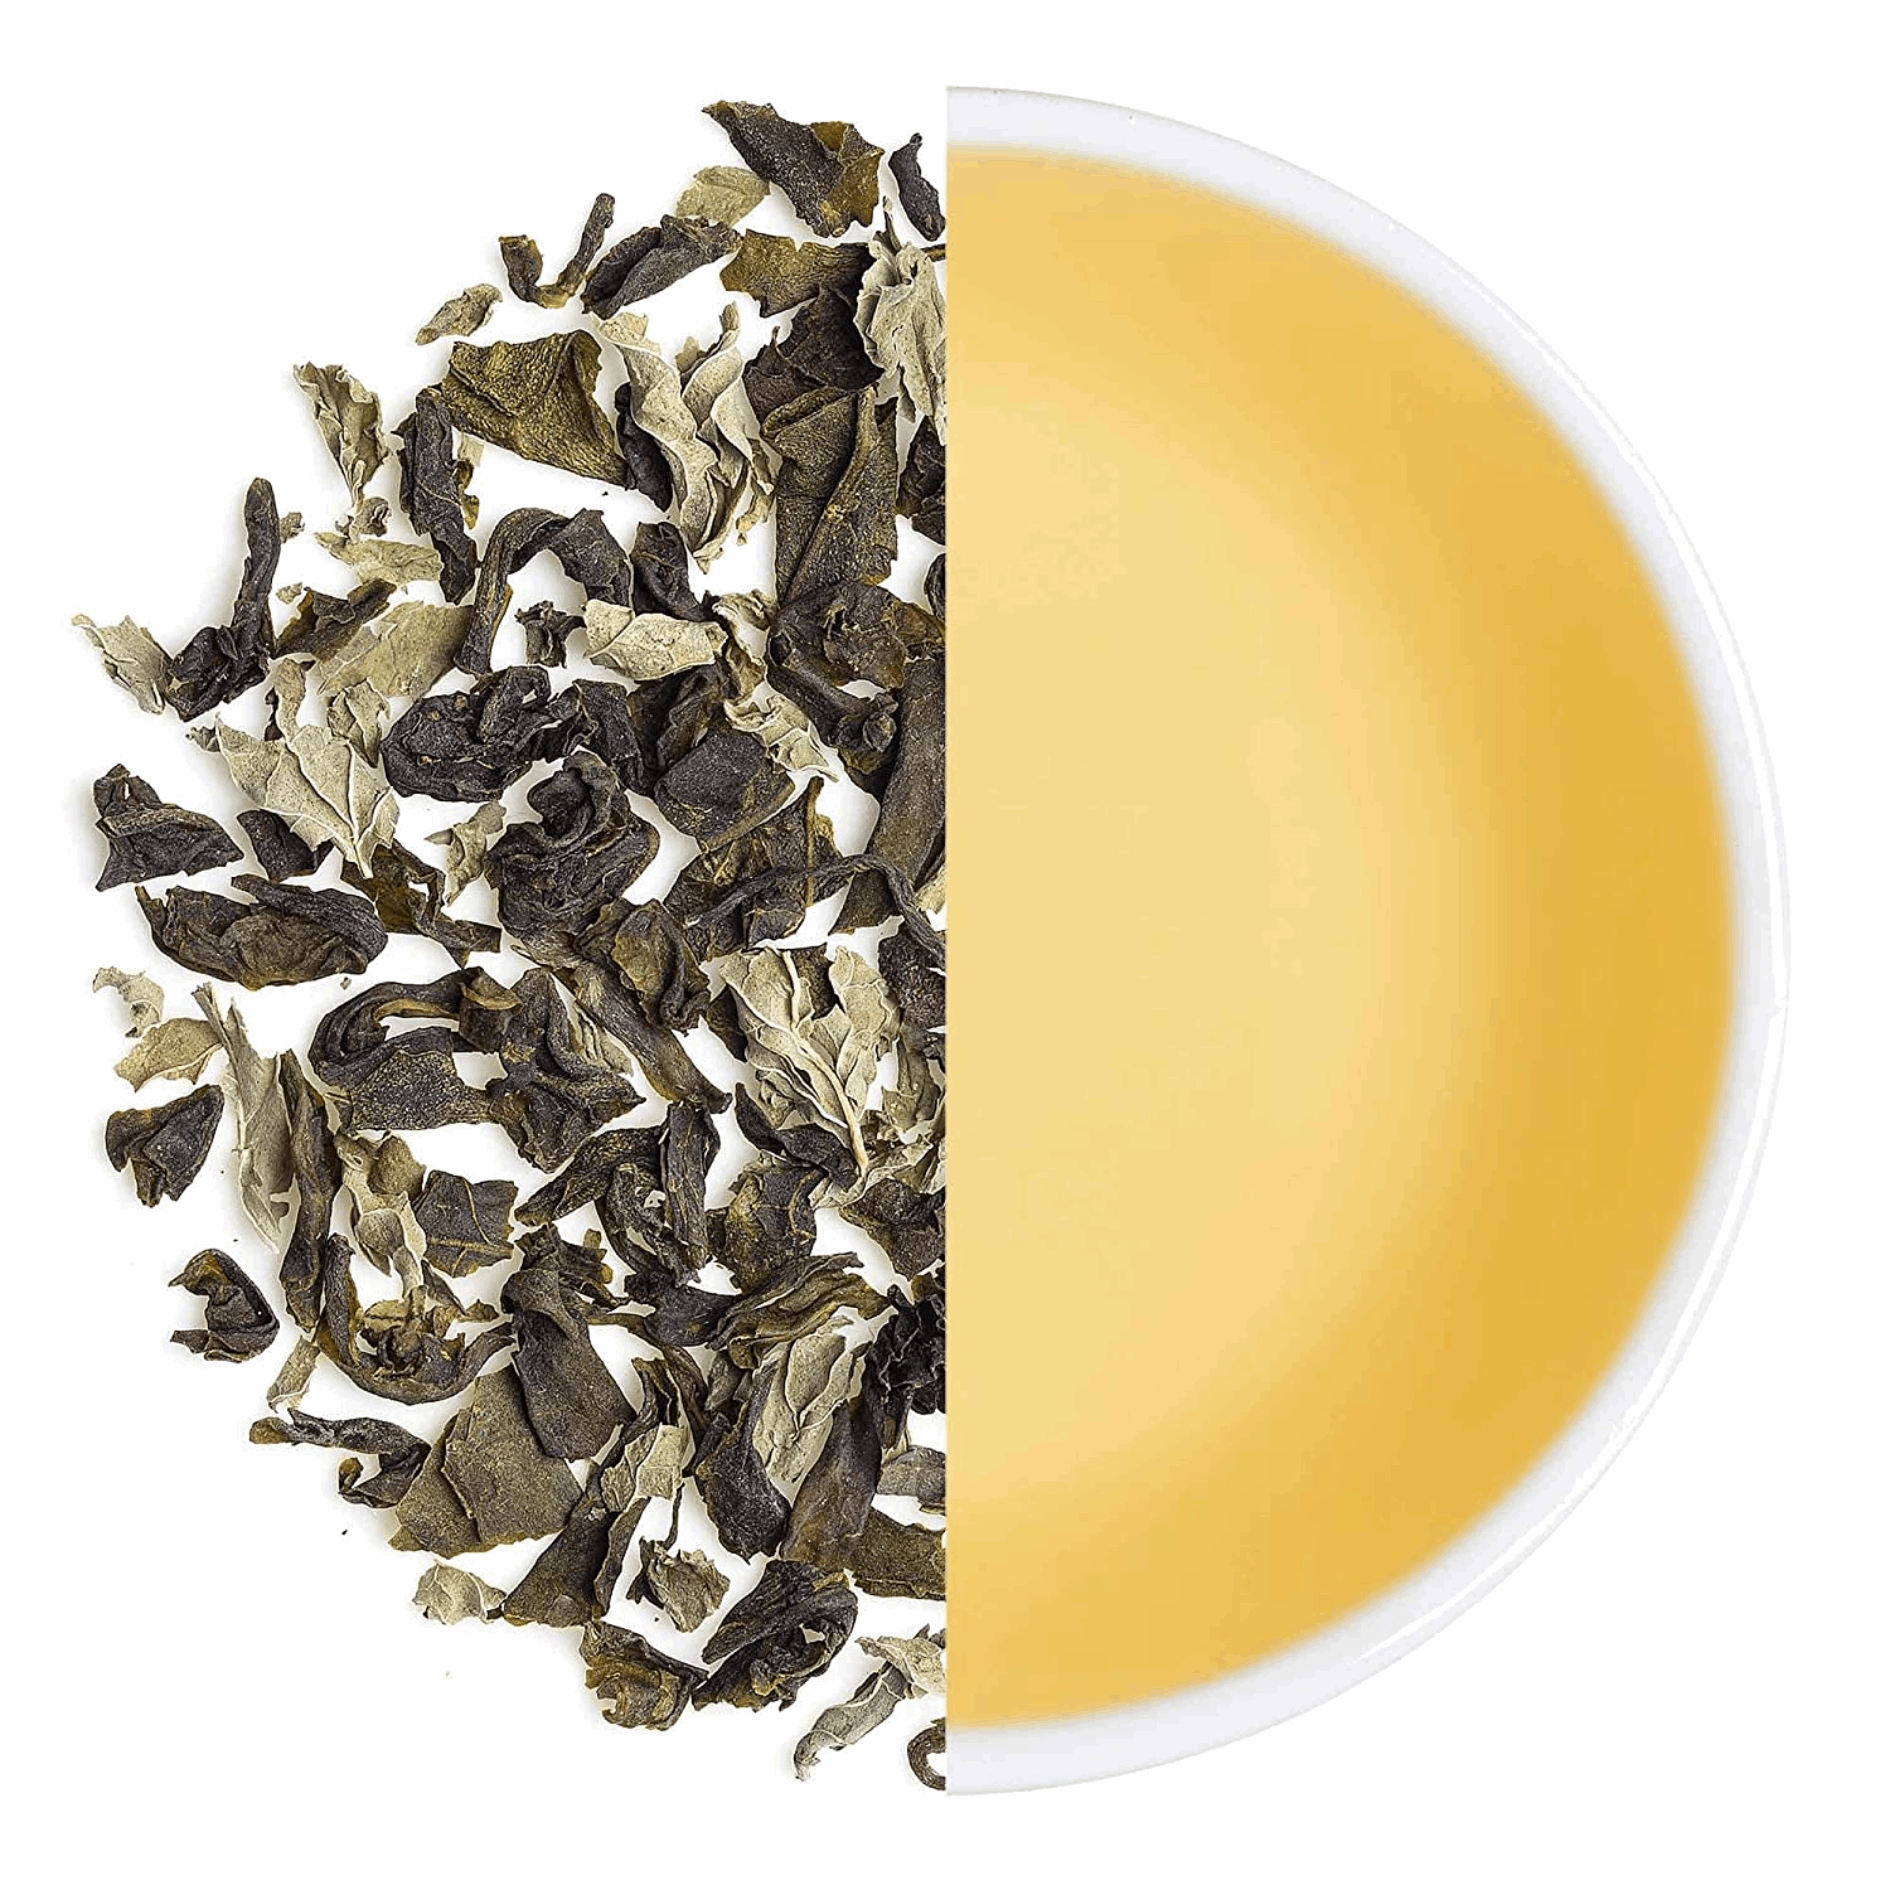 Maghrebi's Mint Green Tea VERTUS TEA